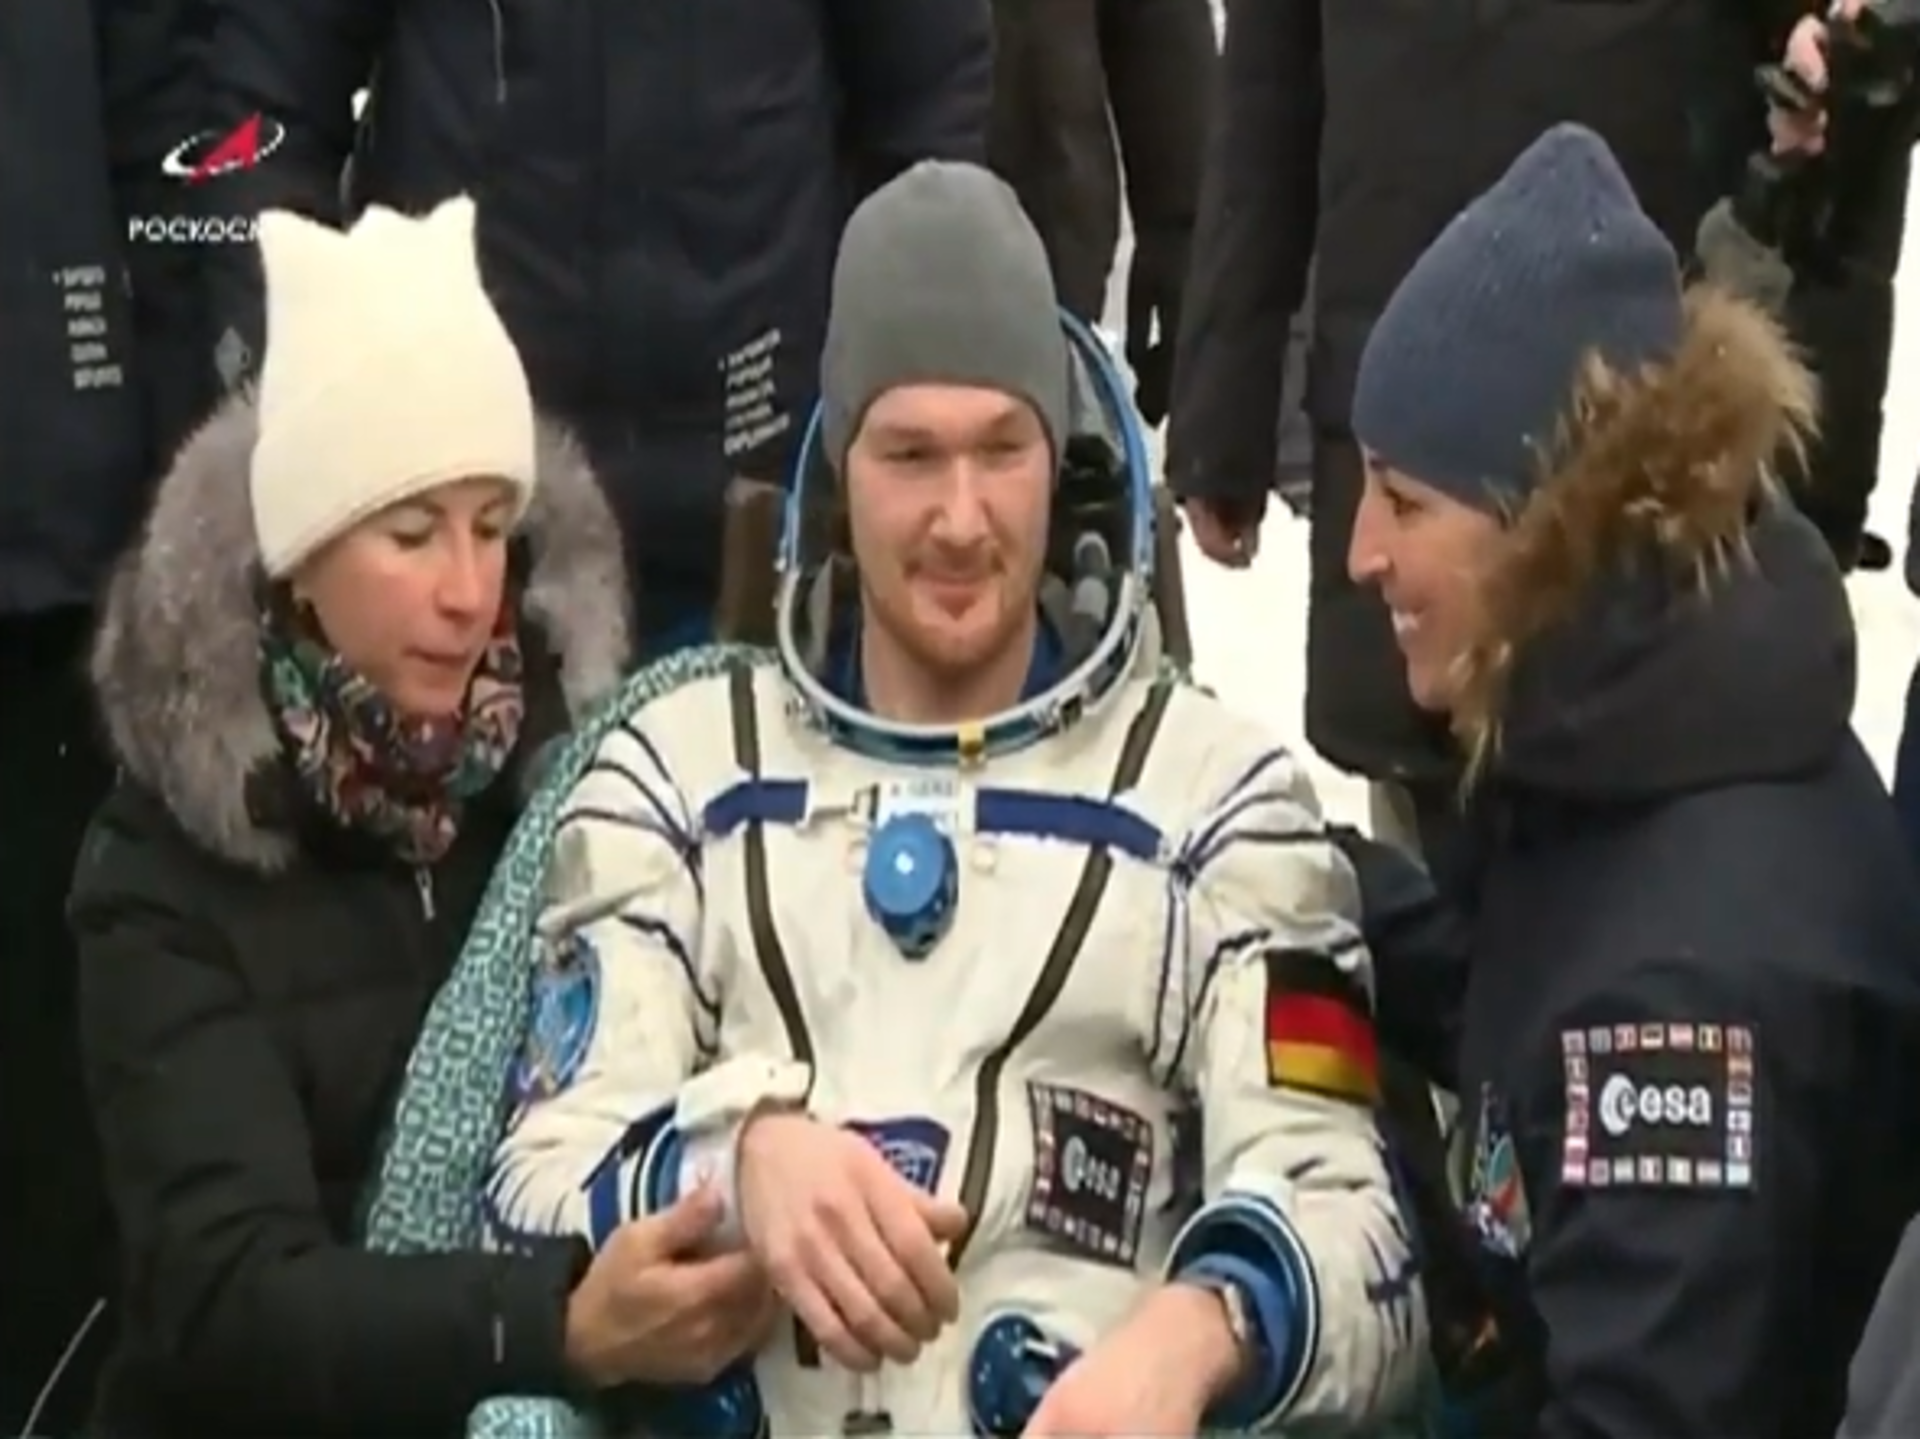 Alexander Gerst's second landing on Earth